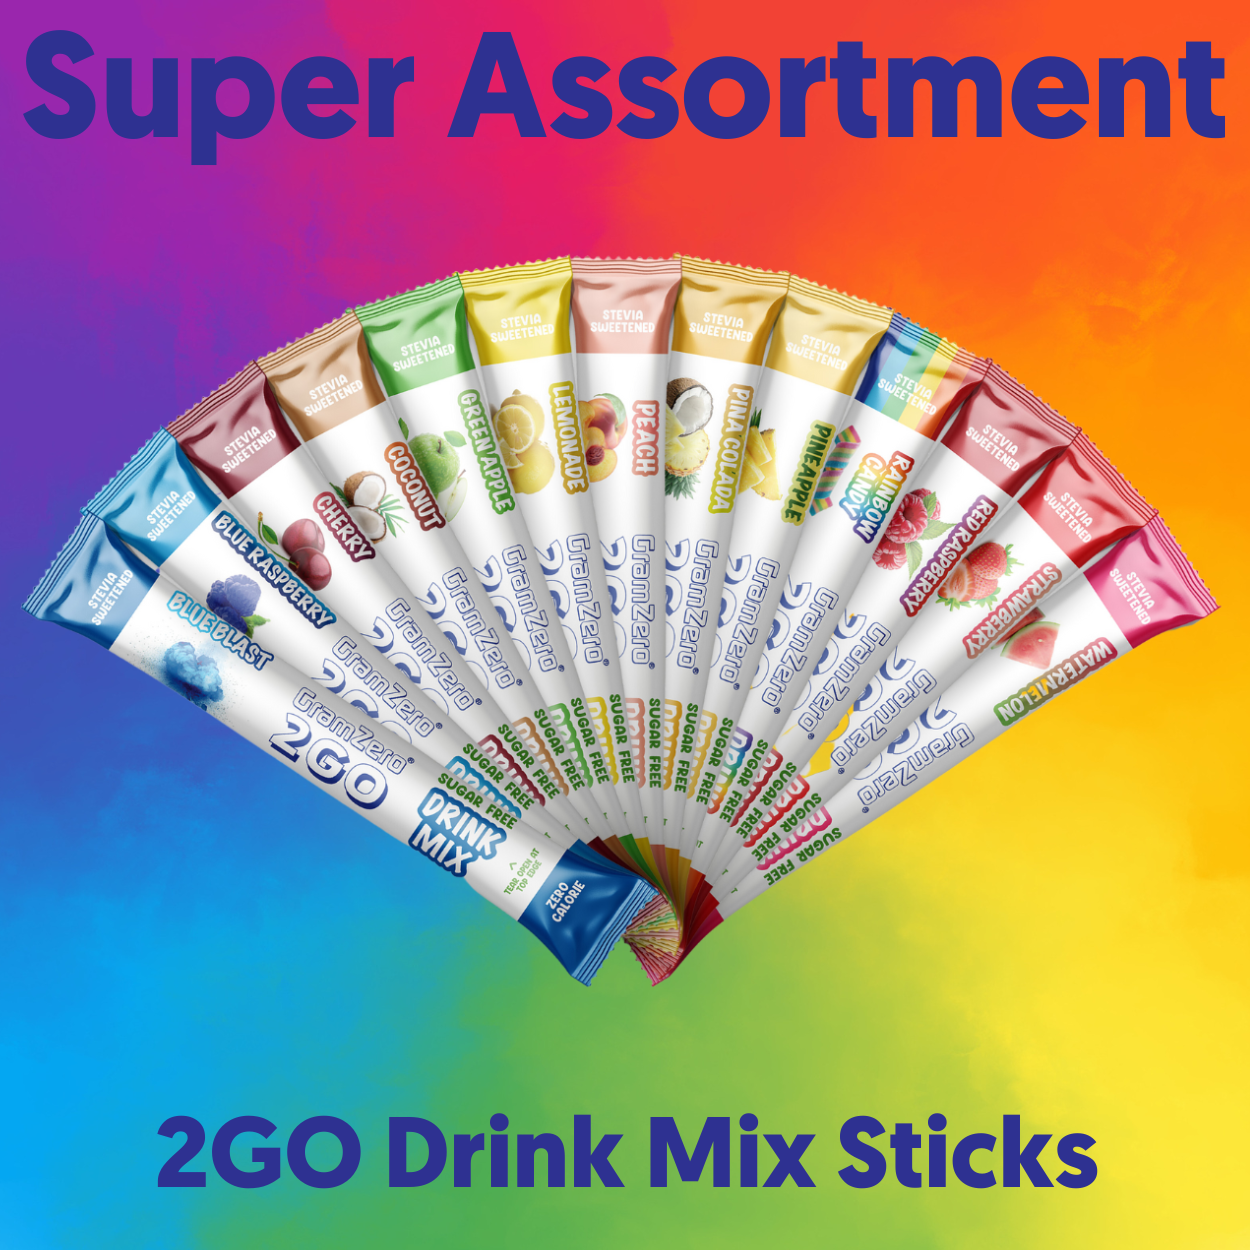 SUPER ASSORTMENT 2GO Sugar Free Drink Mix Sticks: 13 Pack ~ Great for Loaded Tea Kits